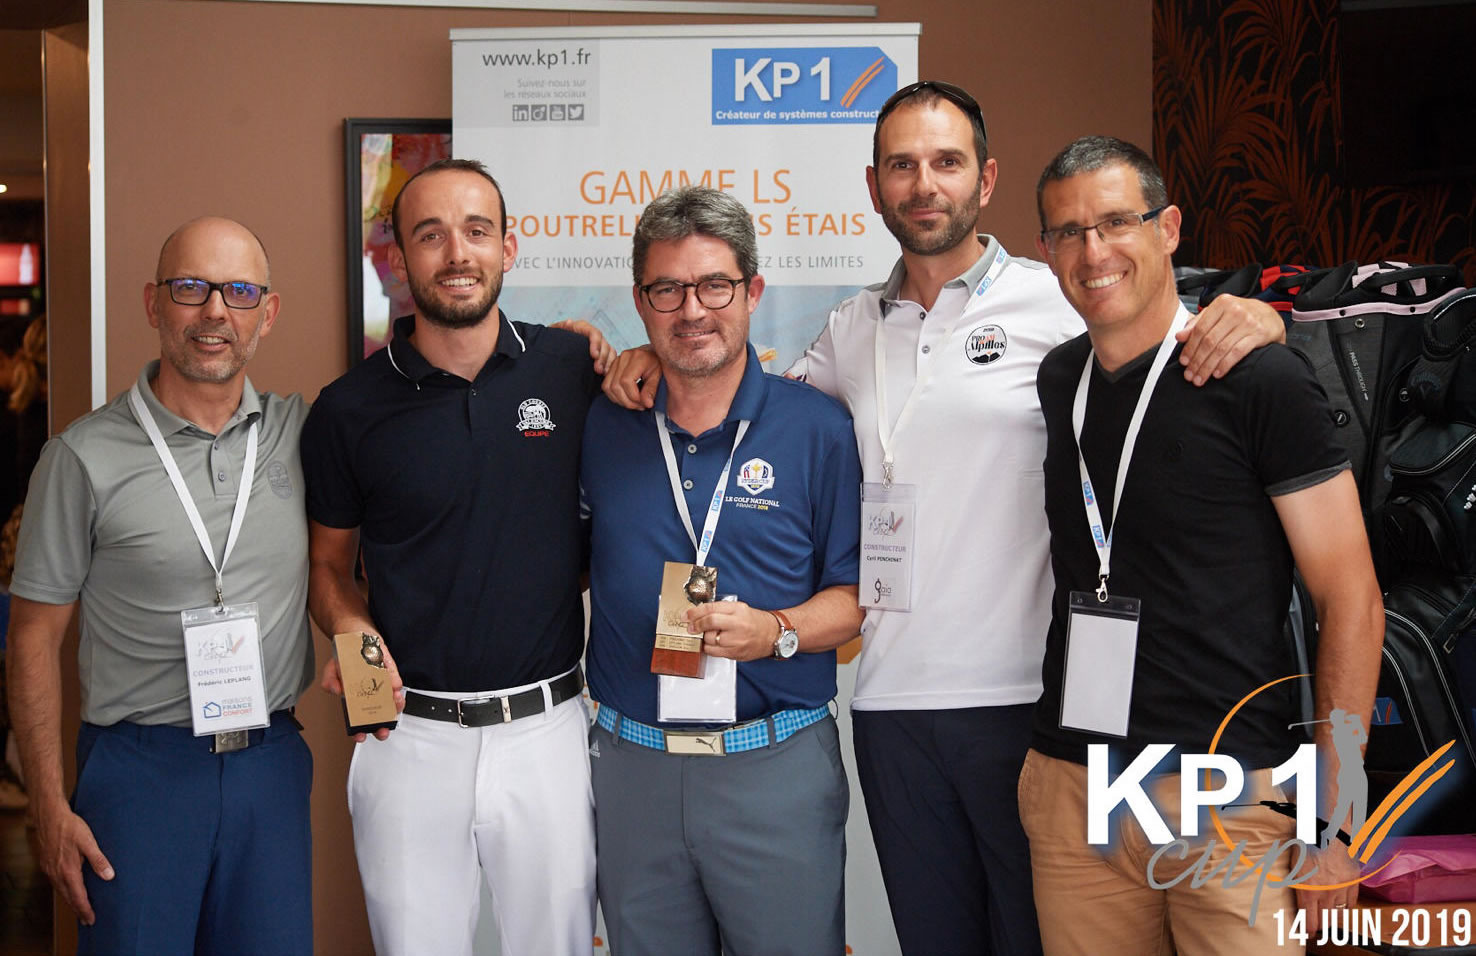 KP1 golf cup 2019